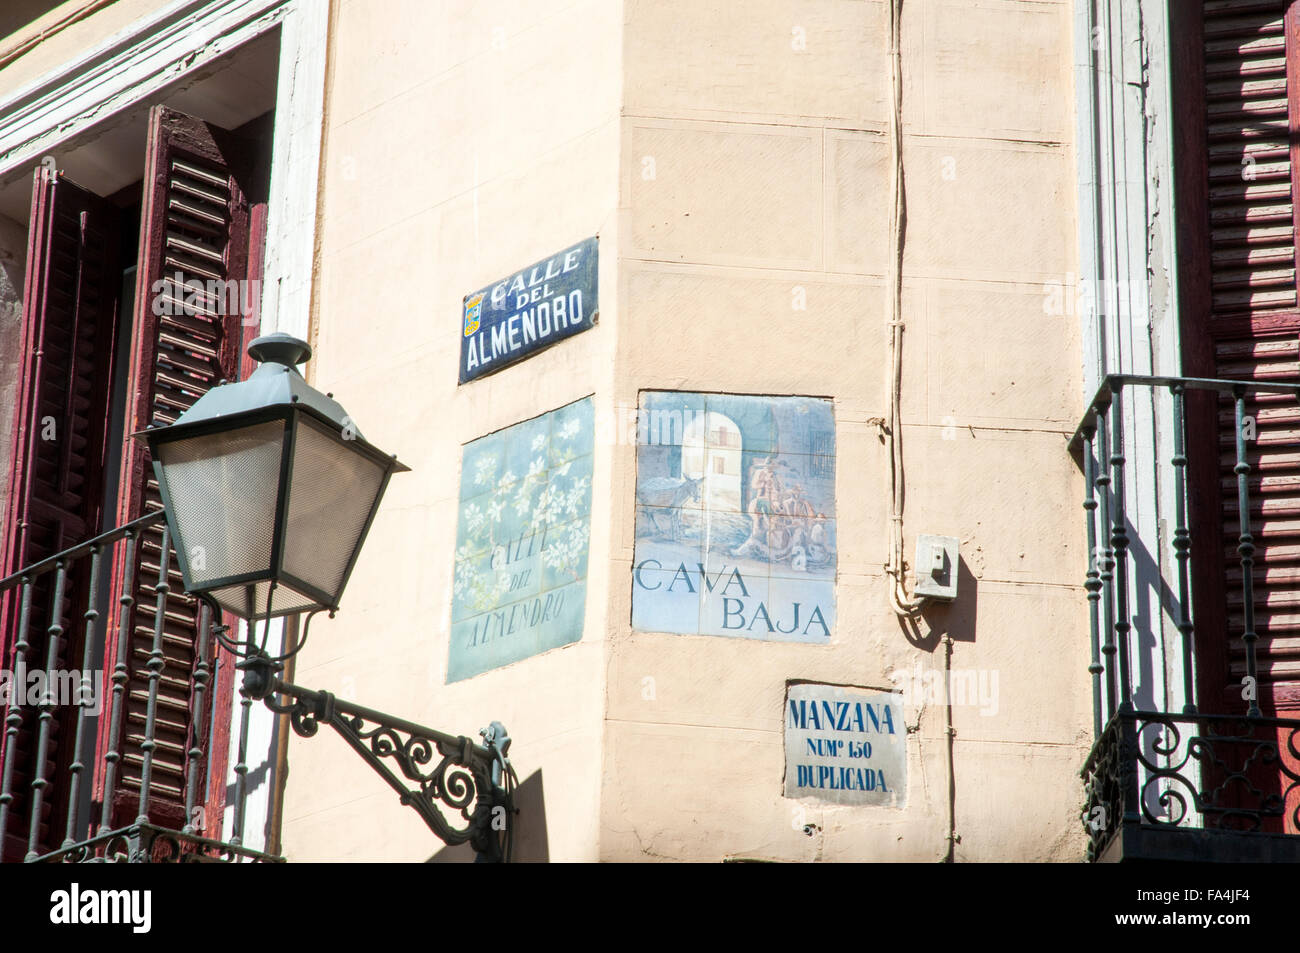 Cava Baja street corner to Almendro street, close view. Madrid, Spain. Stock Photo